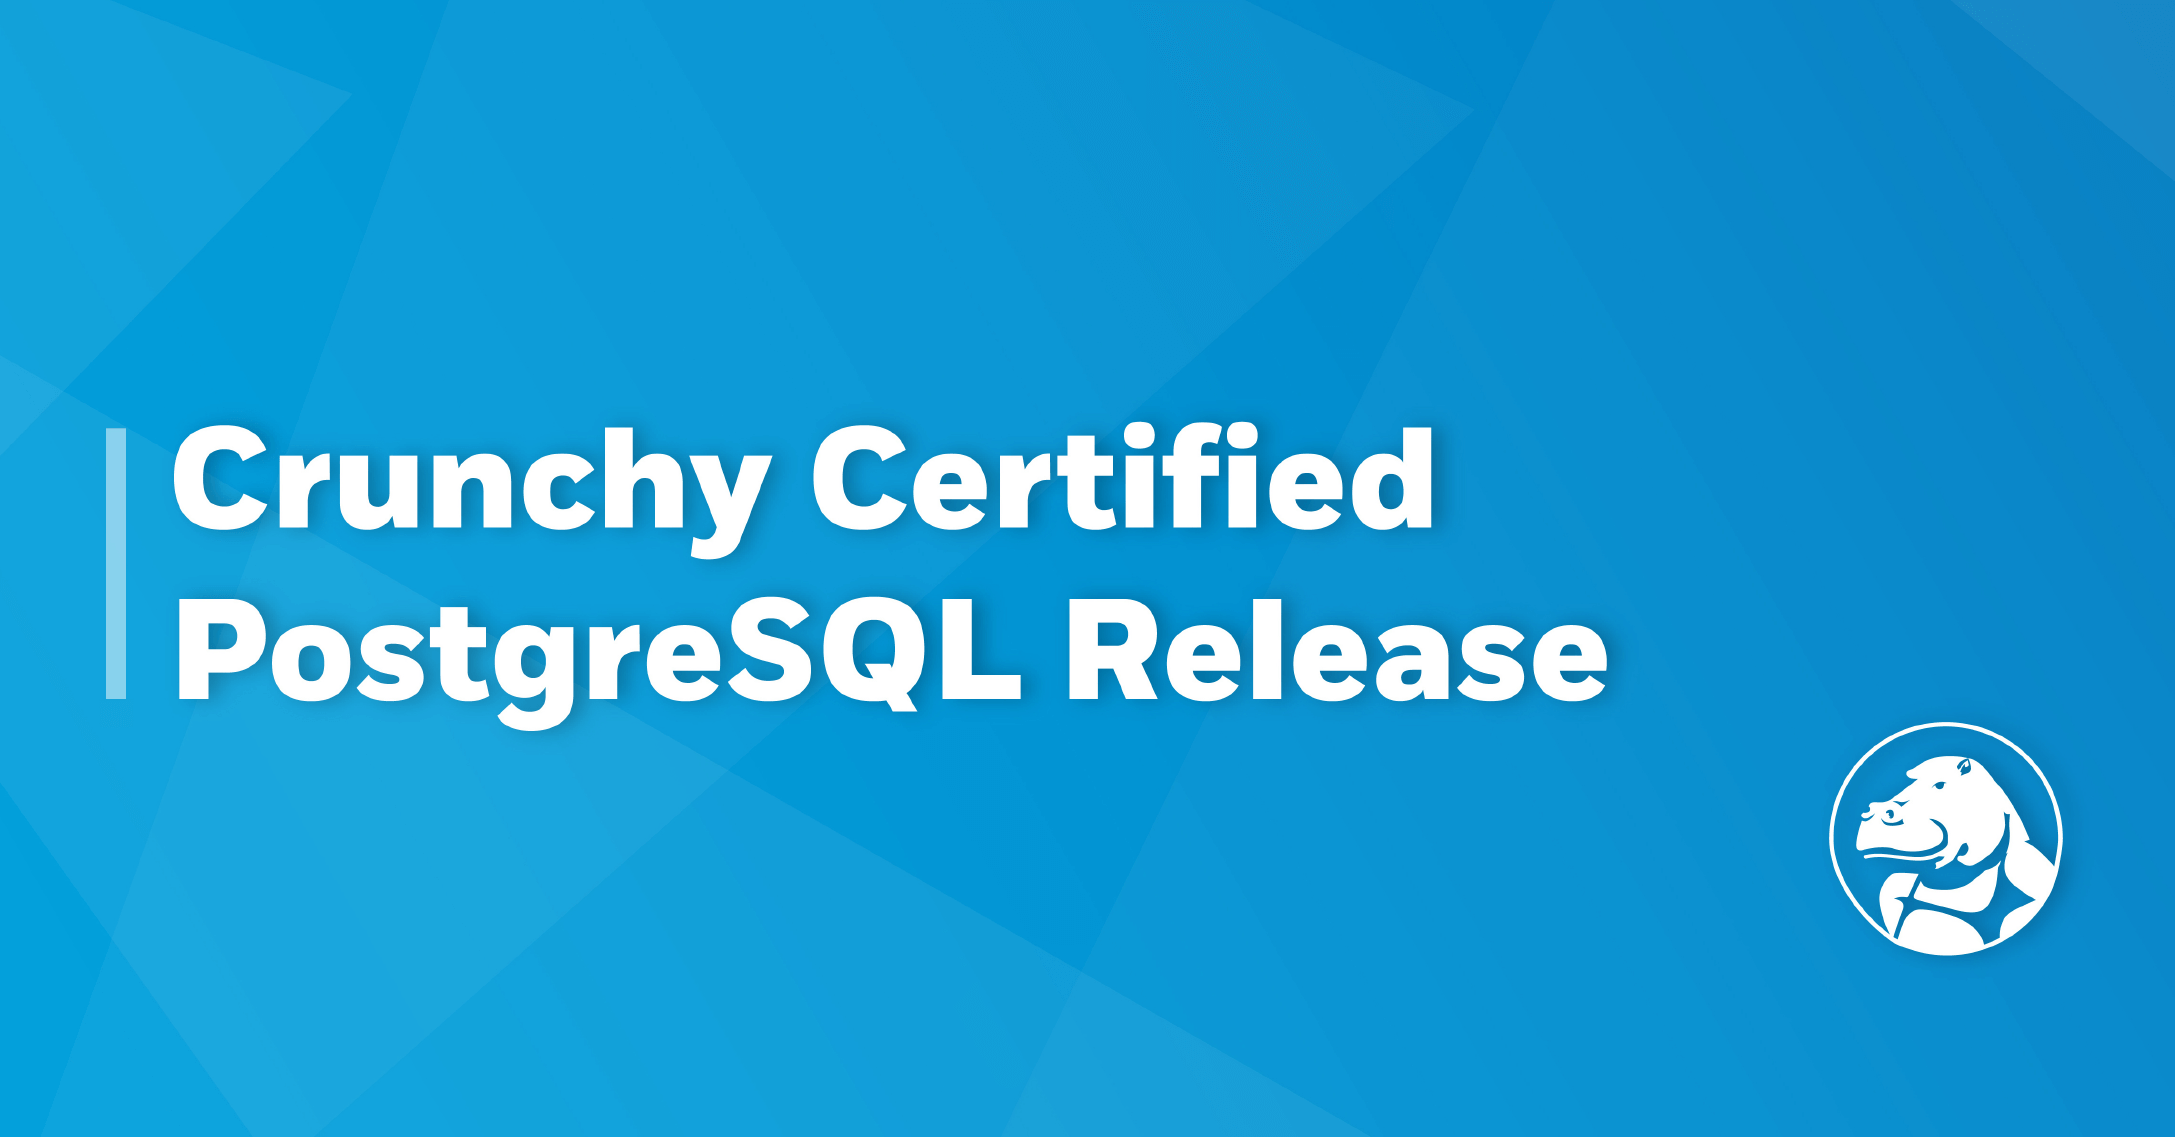 Crunchy Certified PostgreSQL Release - August, 2017